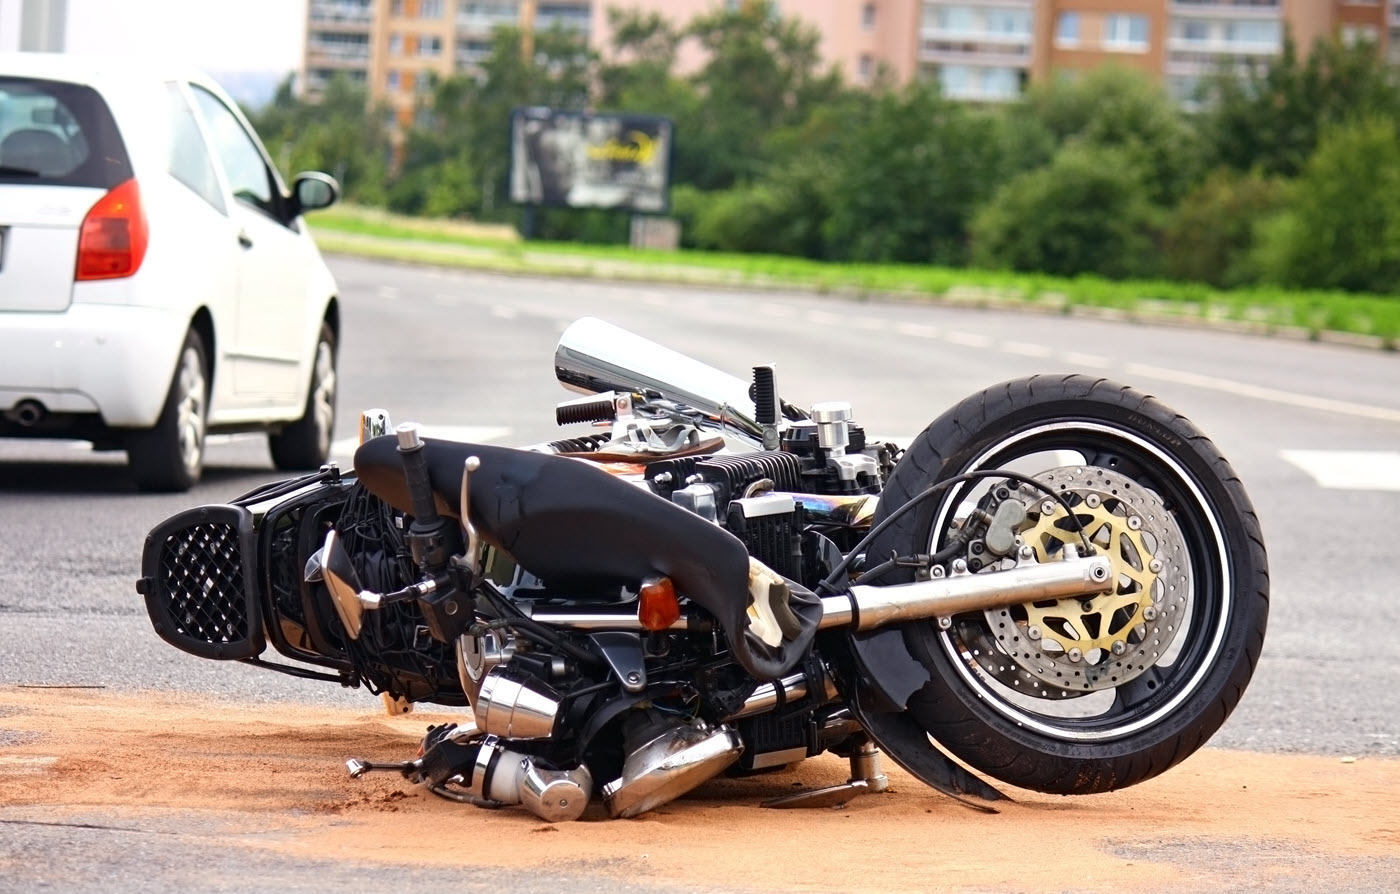 Murfreesboro motorcycle accident lawyers